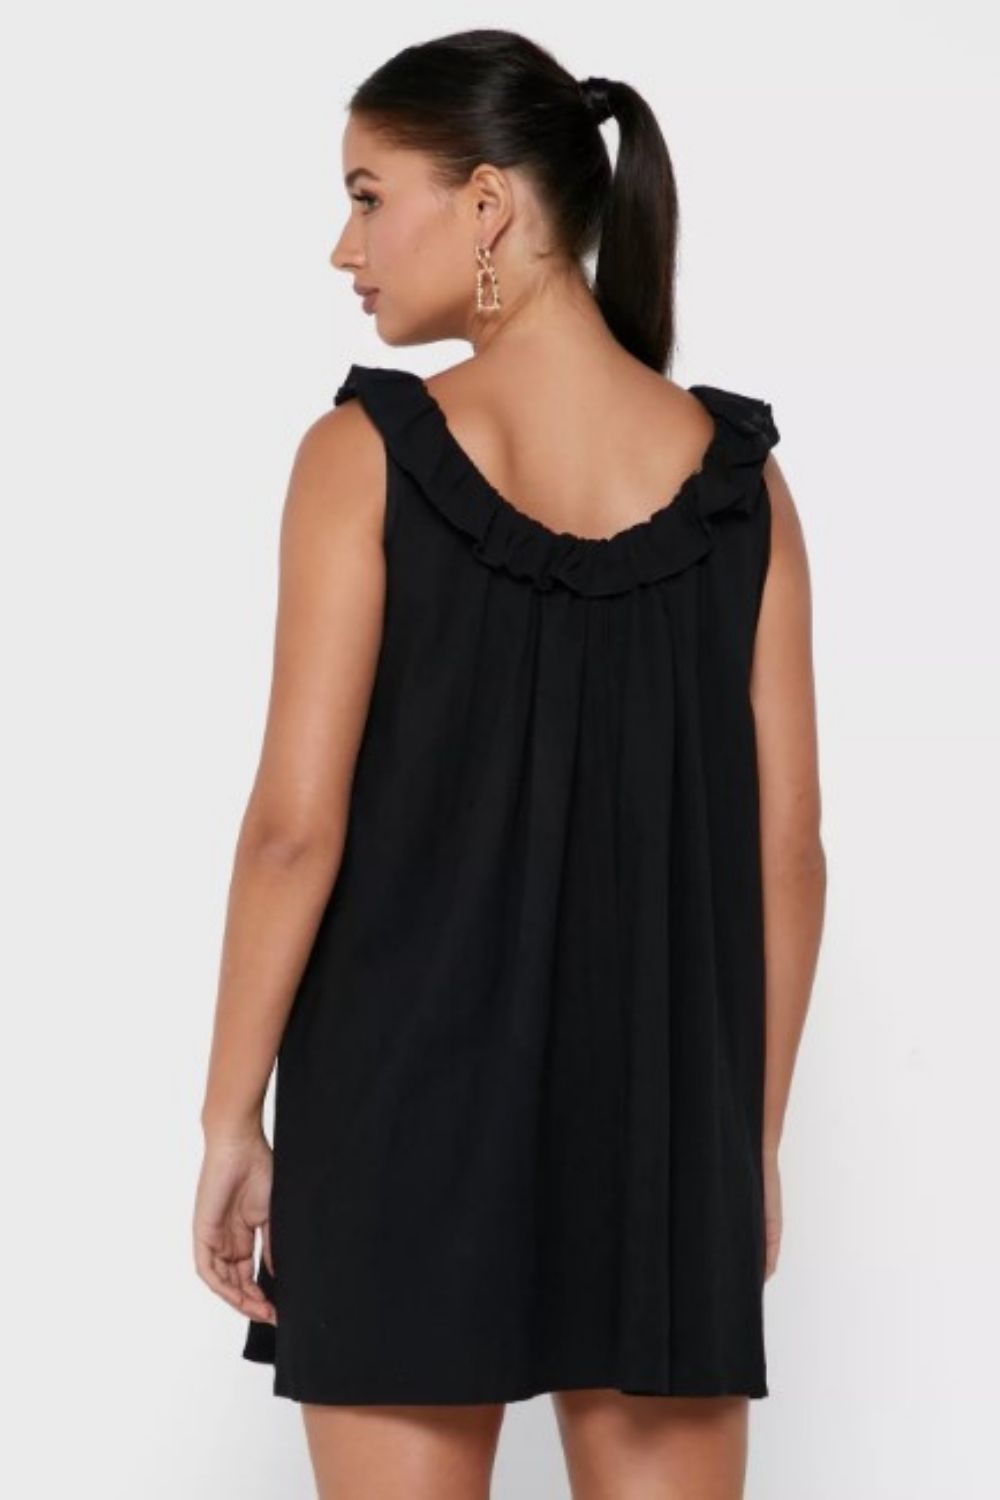 Leather & Chiffon Little Black Dress | Little black dress, Black sleeveless  dress, Black dress